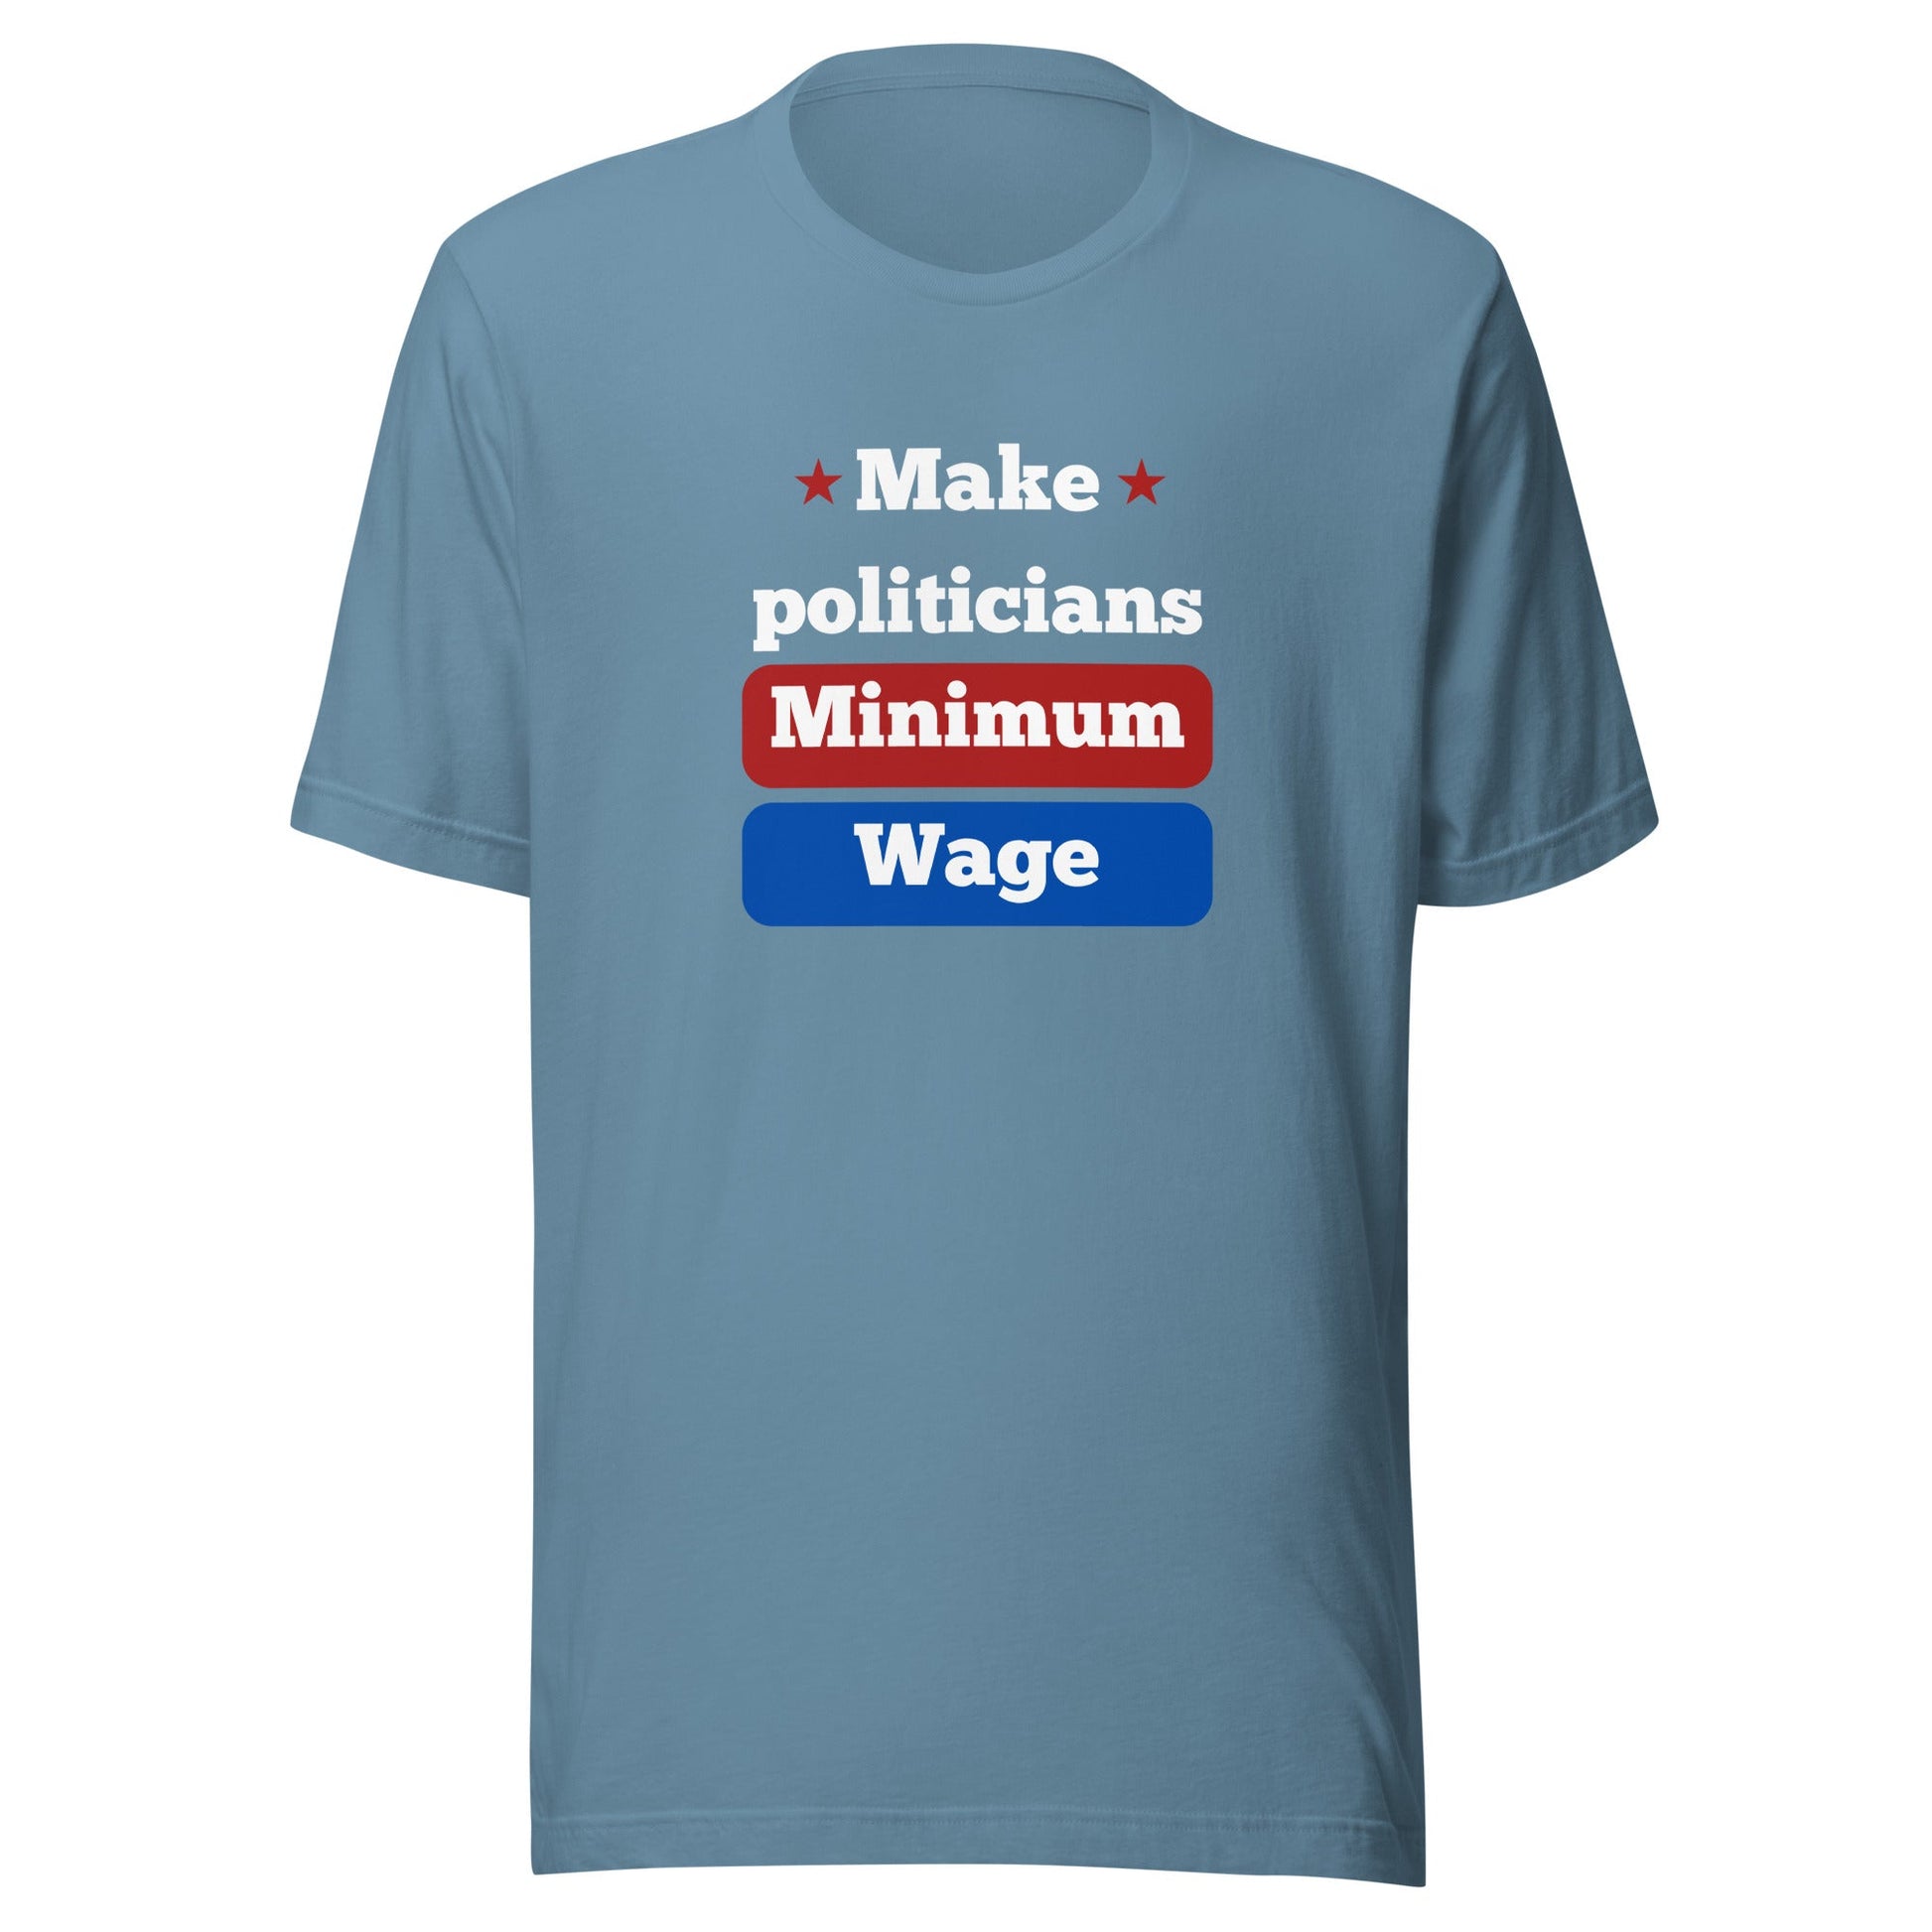 Unisex Minimium wage t-shirt - Bright Eye Creations